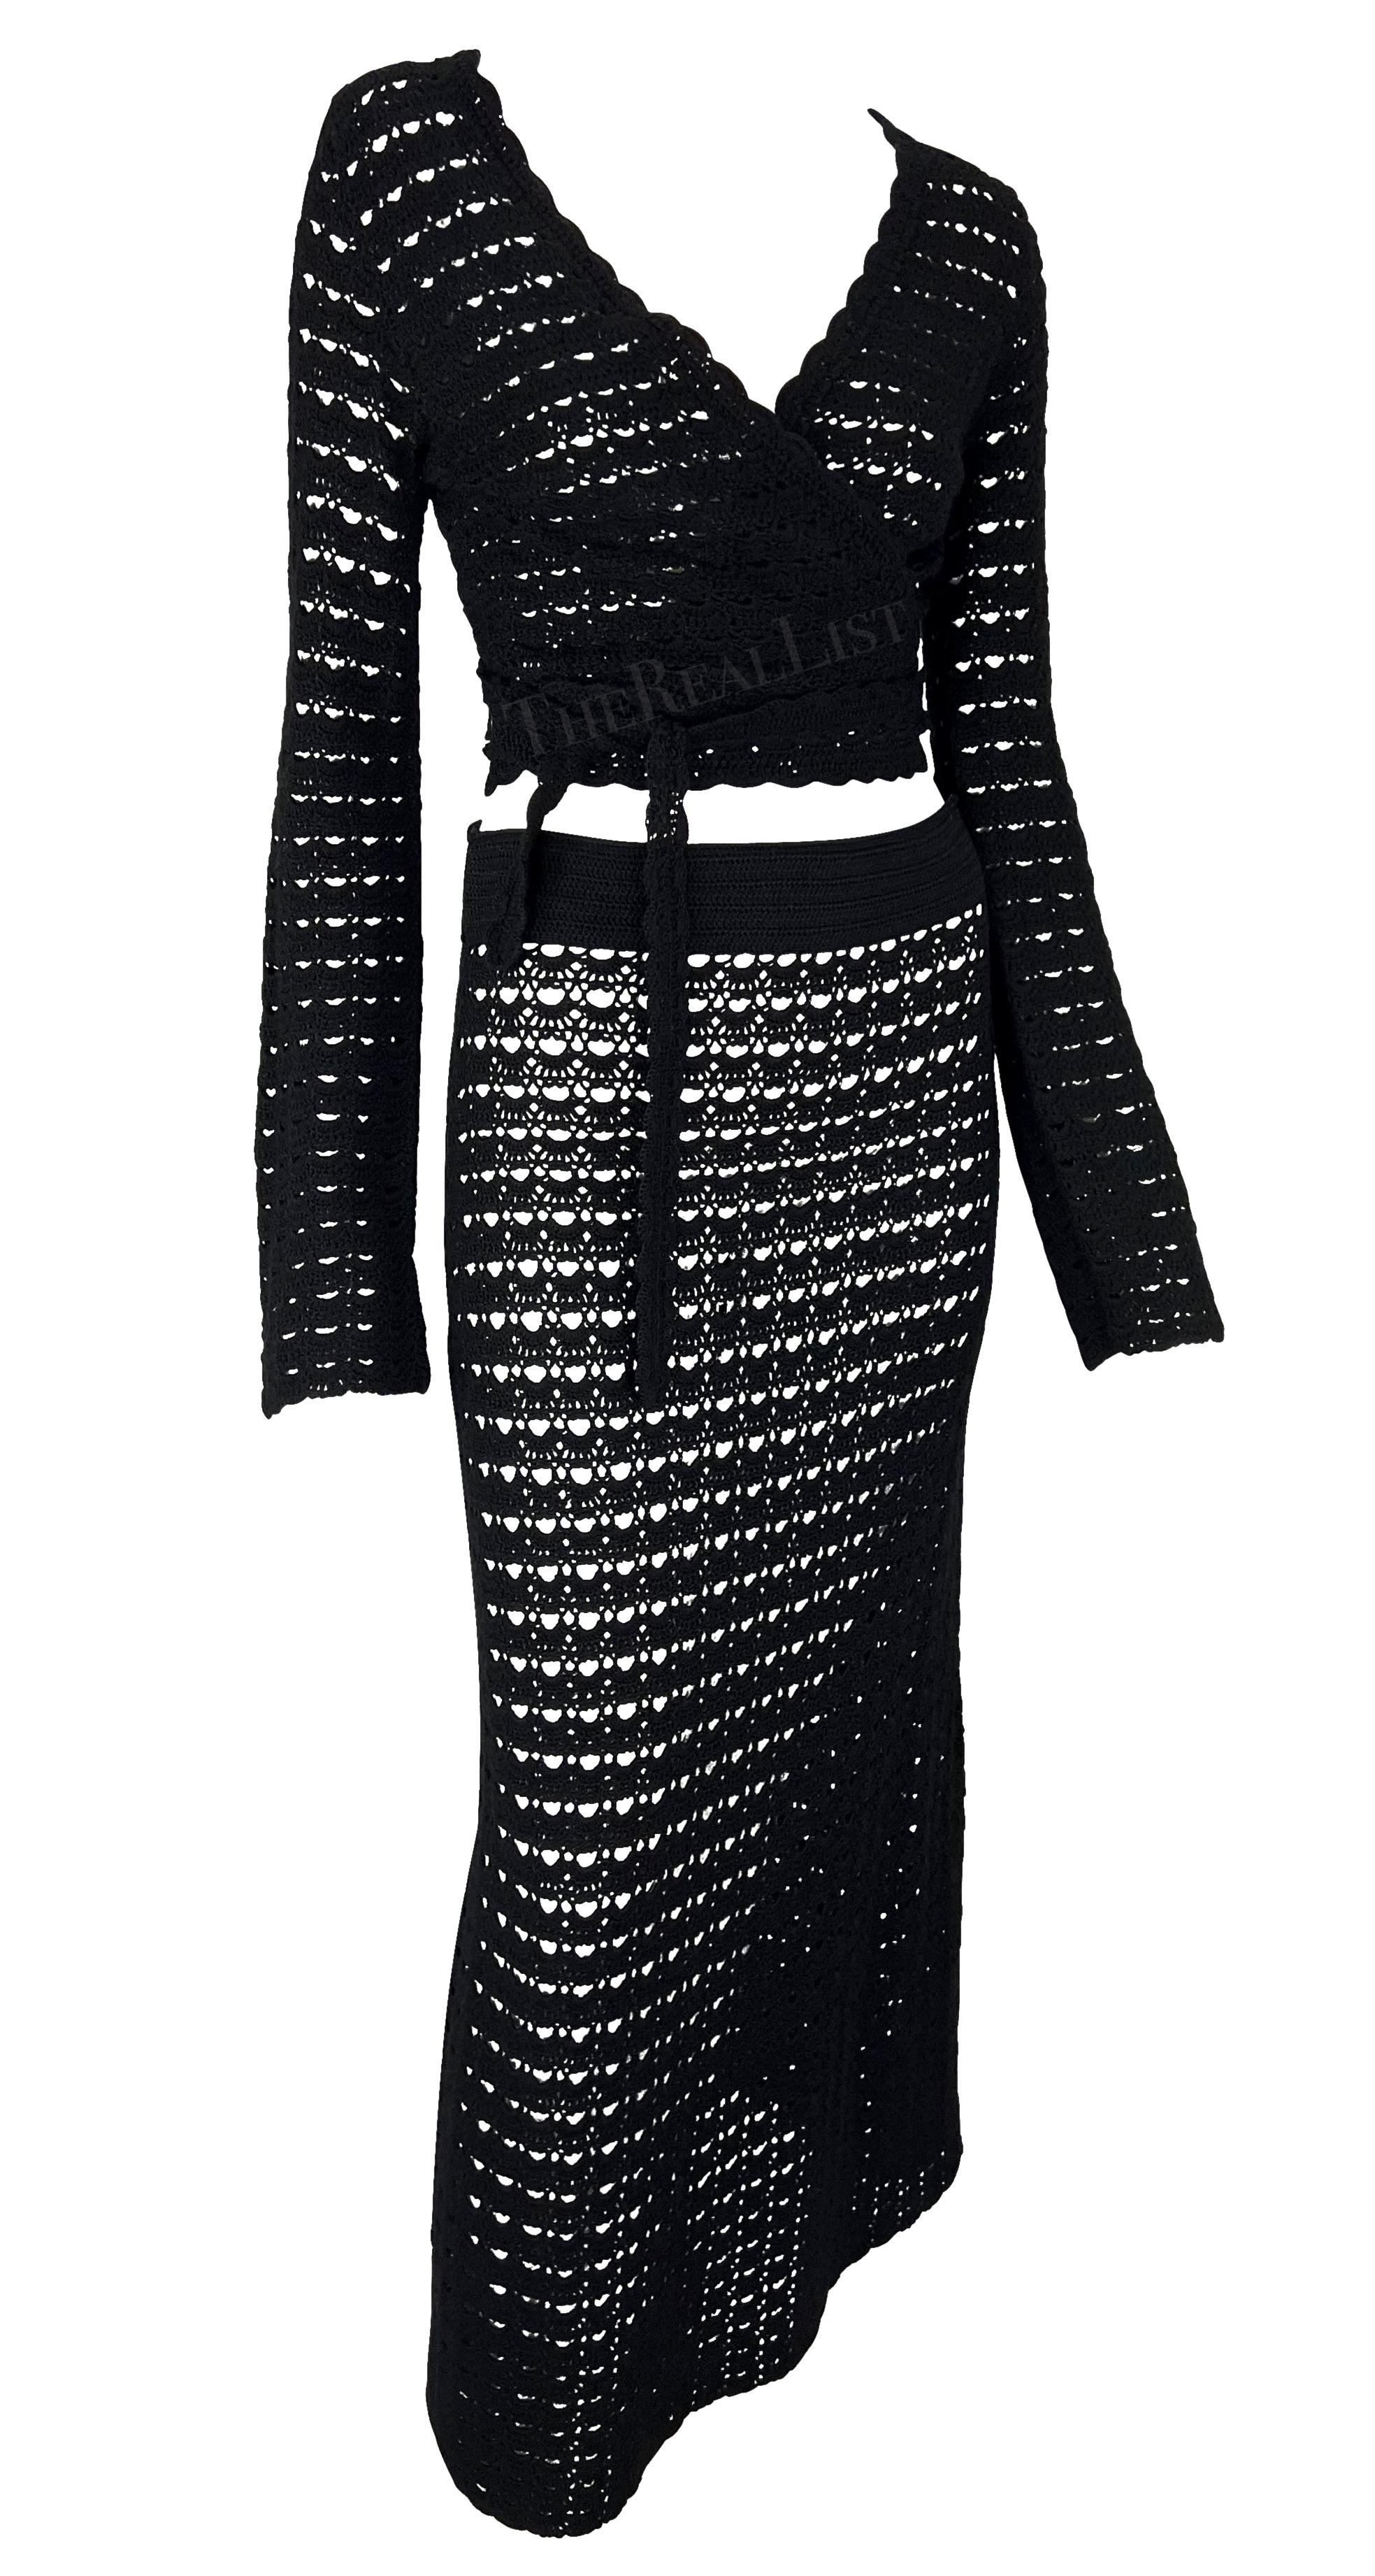 S/S 1997 Dolce & Gabbana Black Knit Crochet Maxi Skirt Wrap Top Skirt Set en vente 4